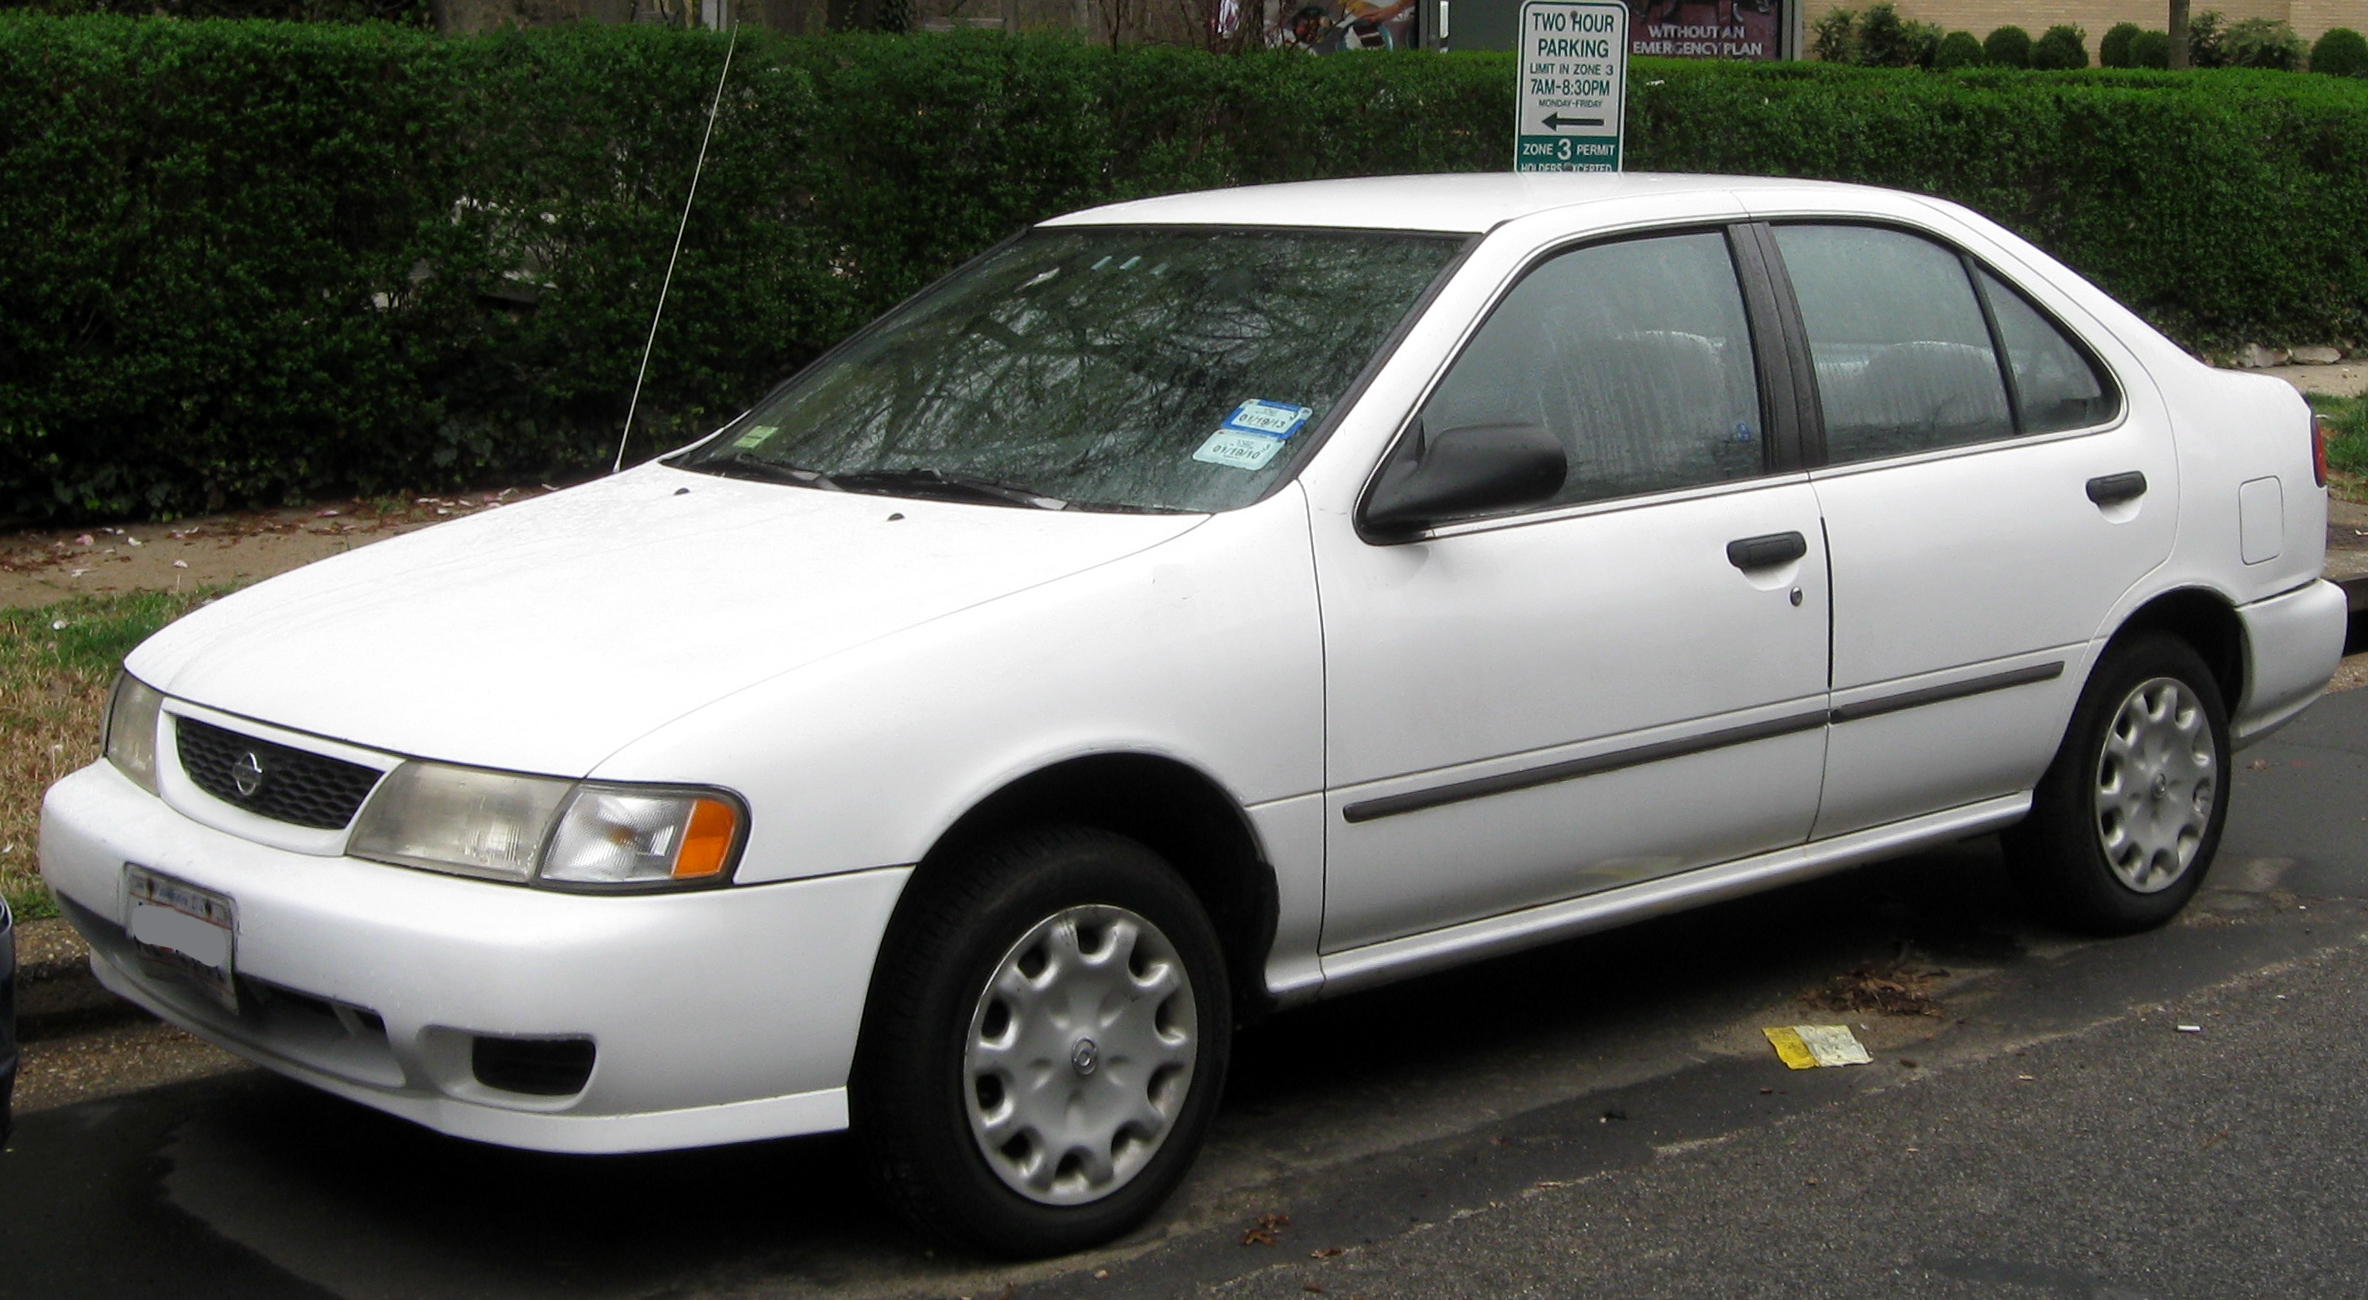 File:1998 Nissan Sentra GXE.JPG - Wikimedia Commons